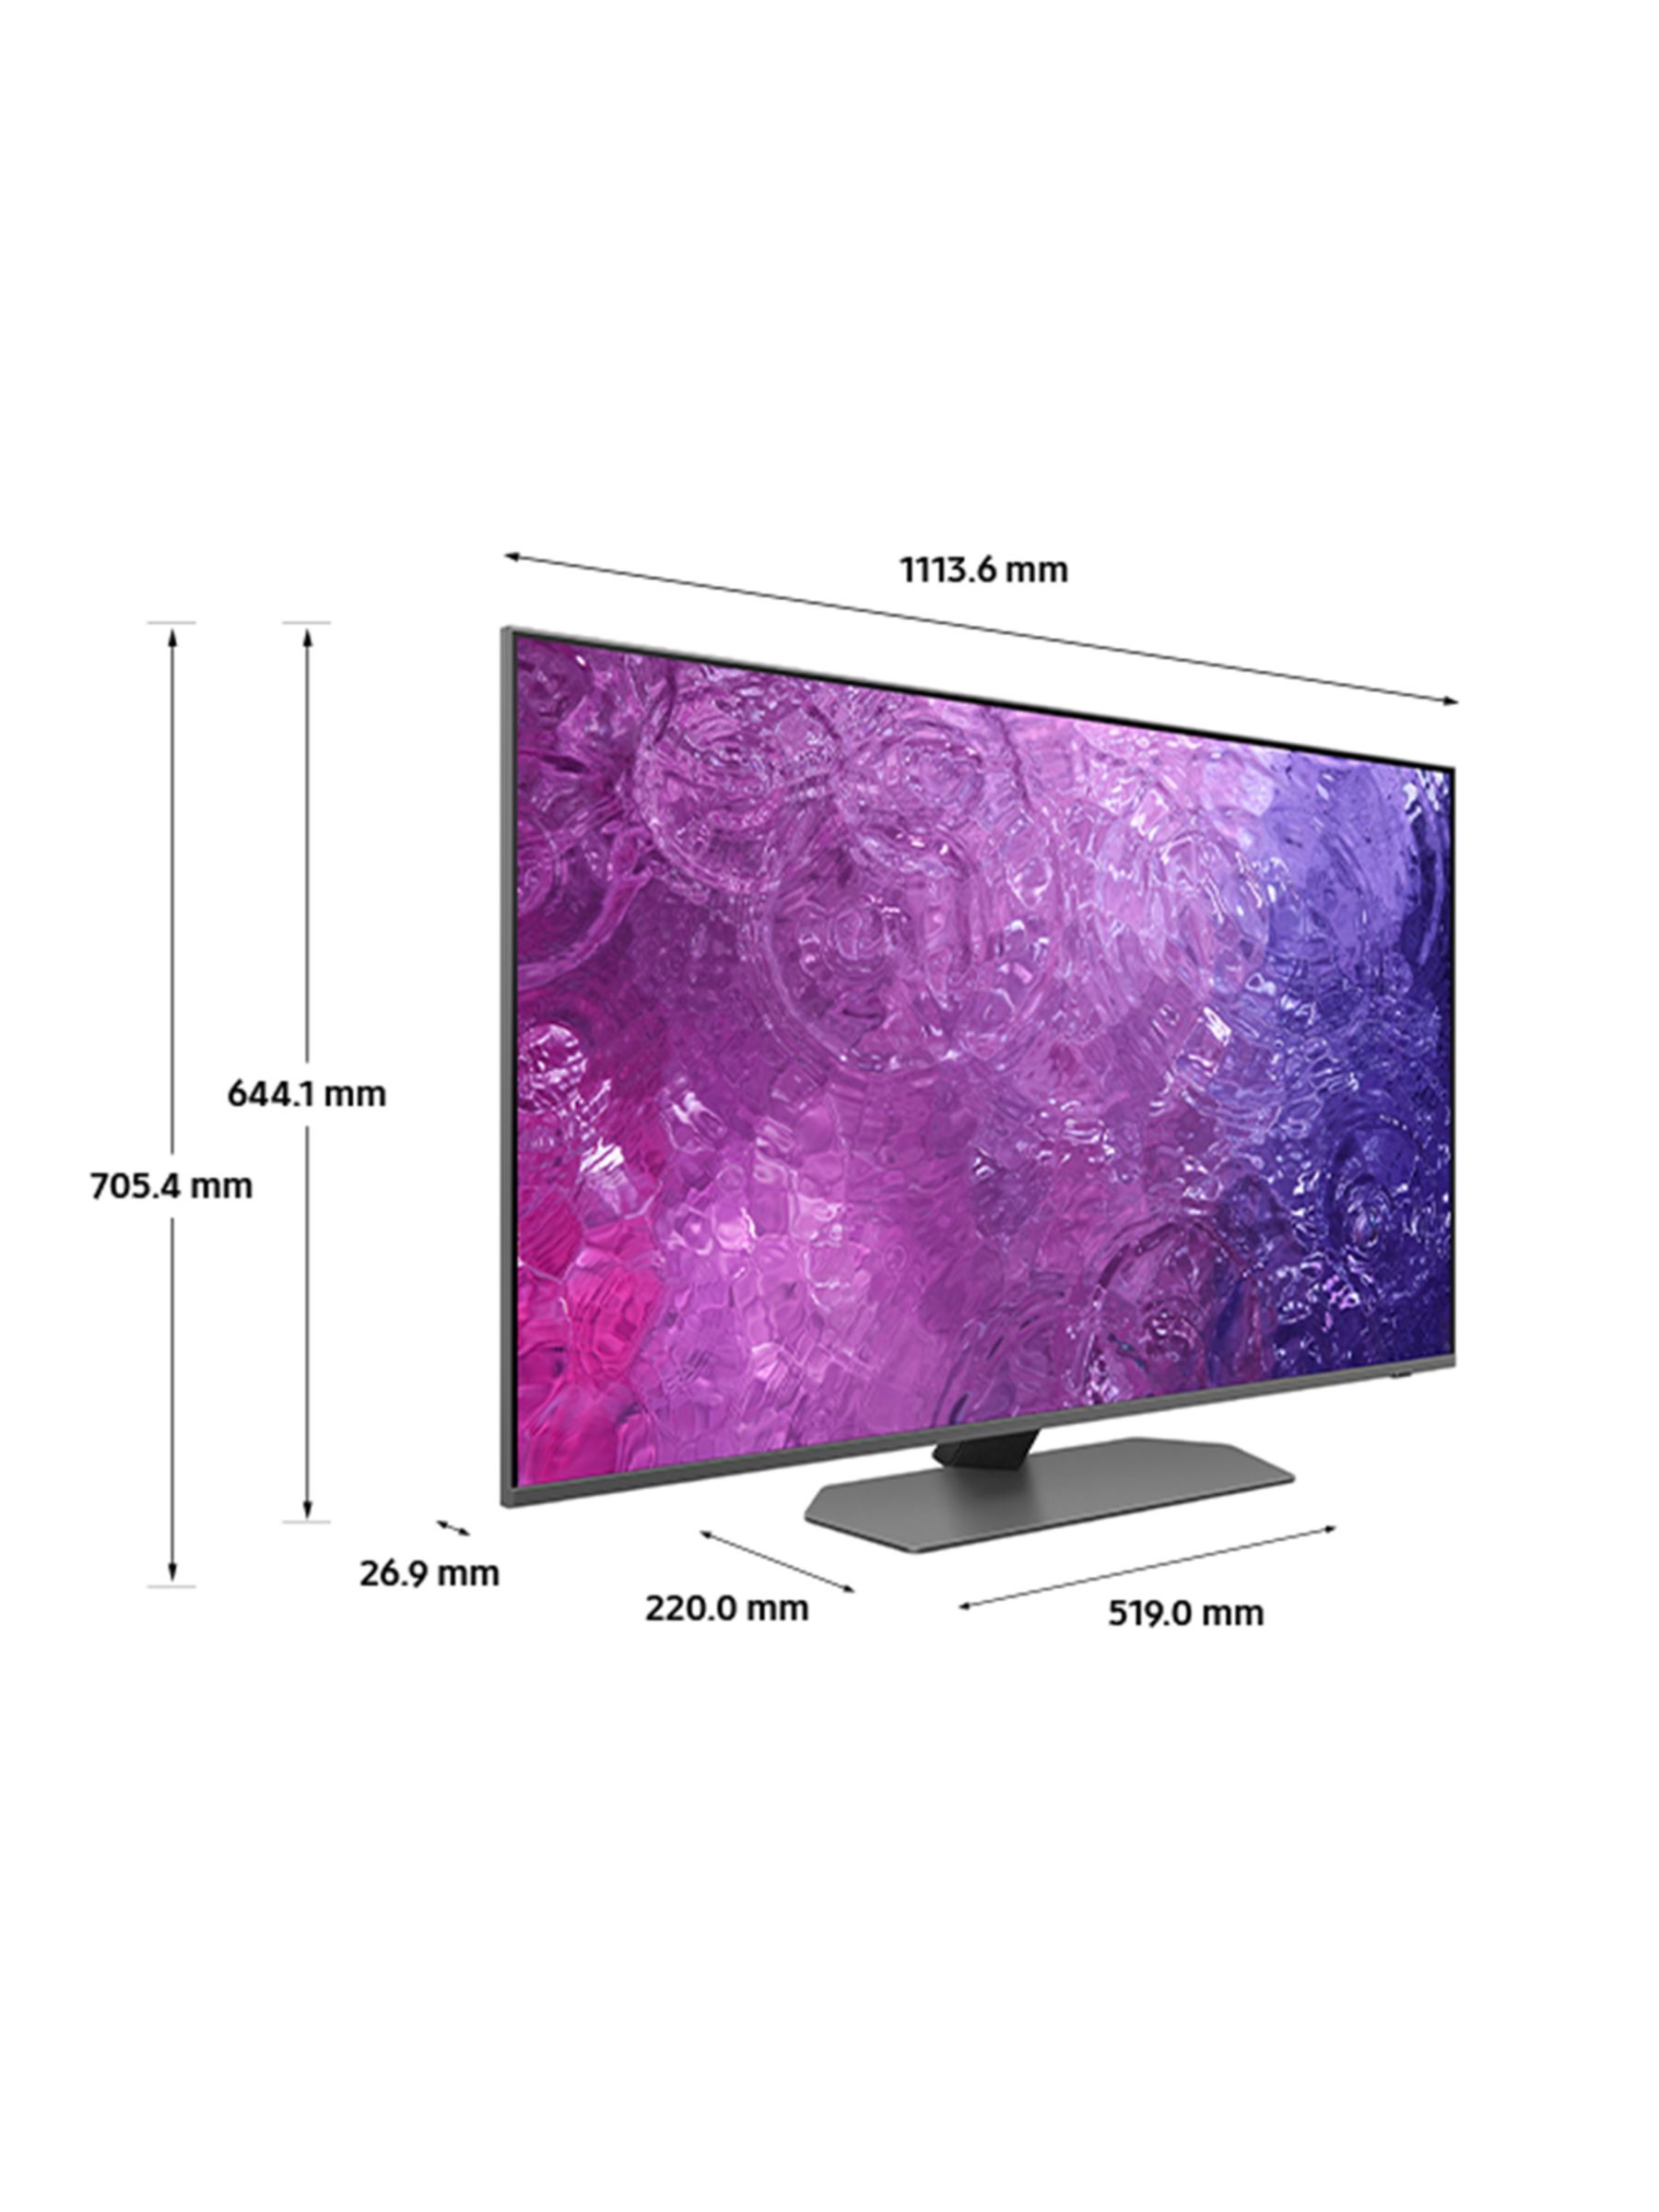 Samsung Pantalla 55 NEO QLED 4K UHD Smart TV | Costco Mé